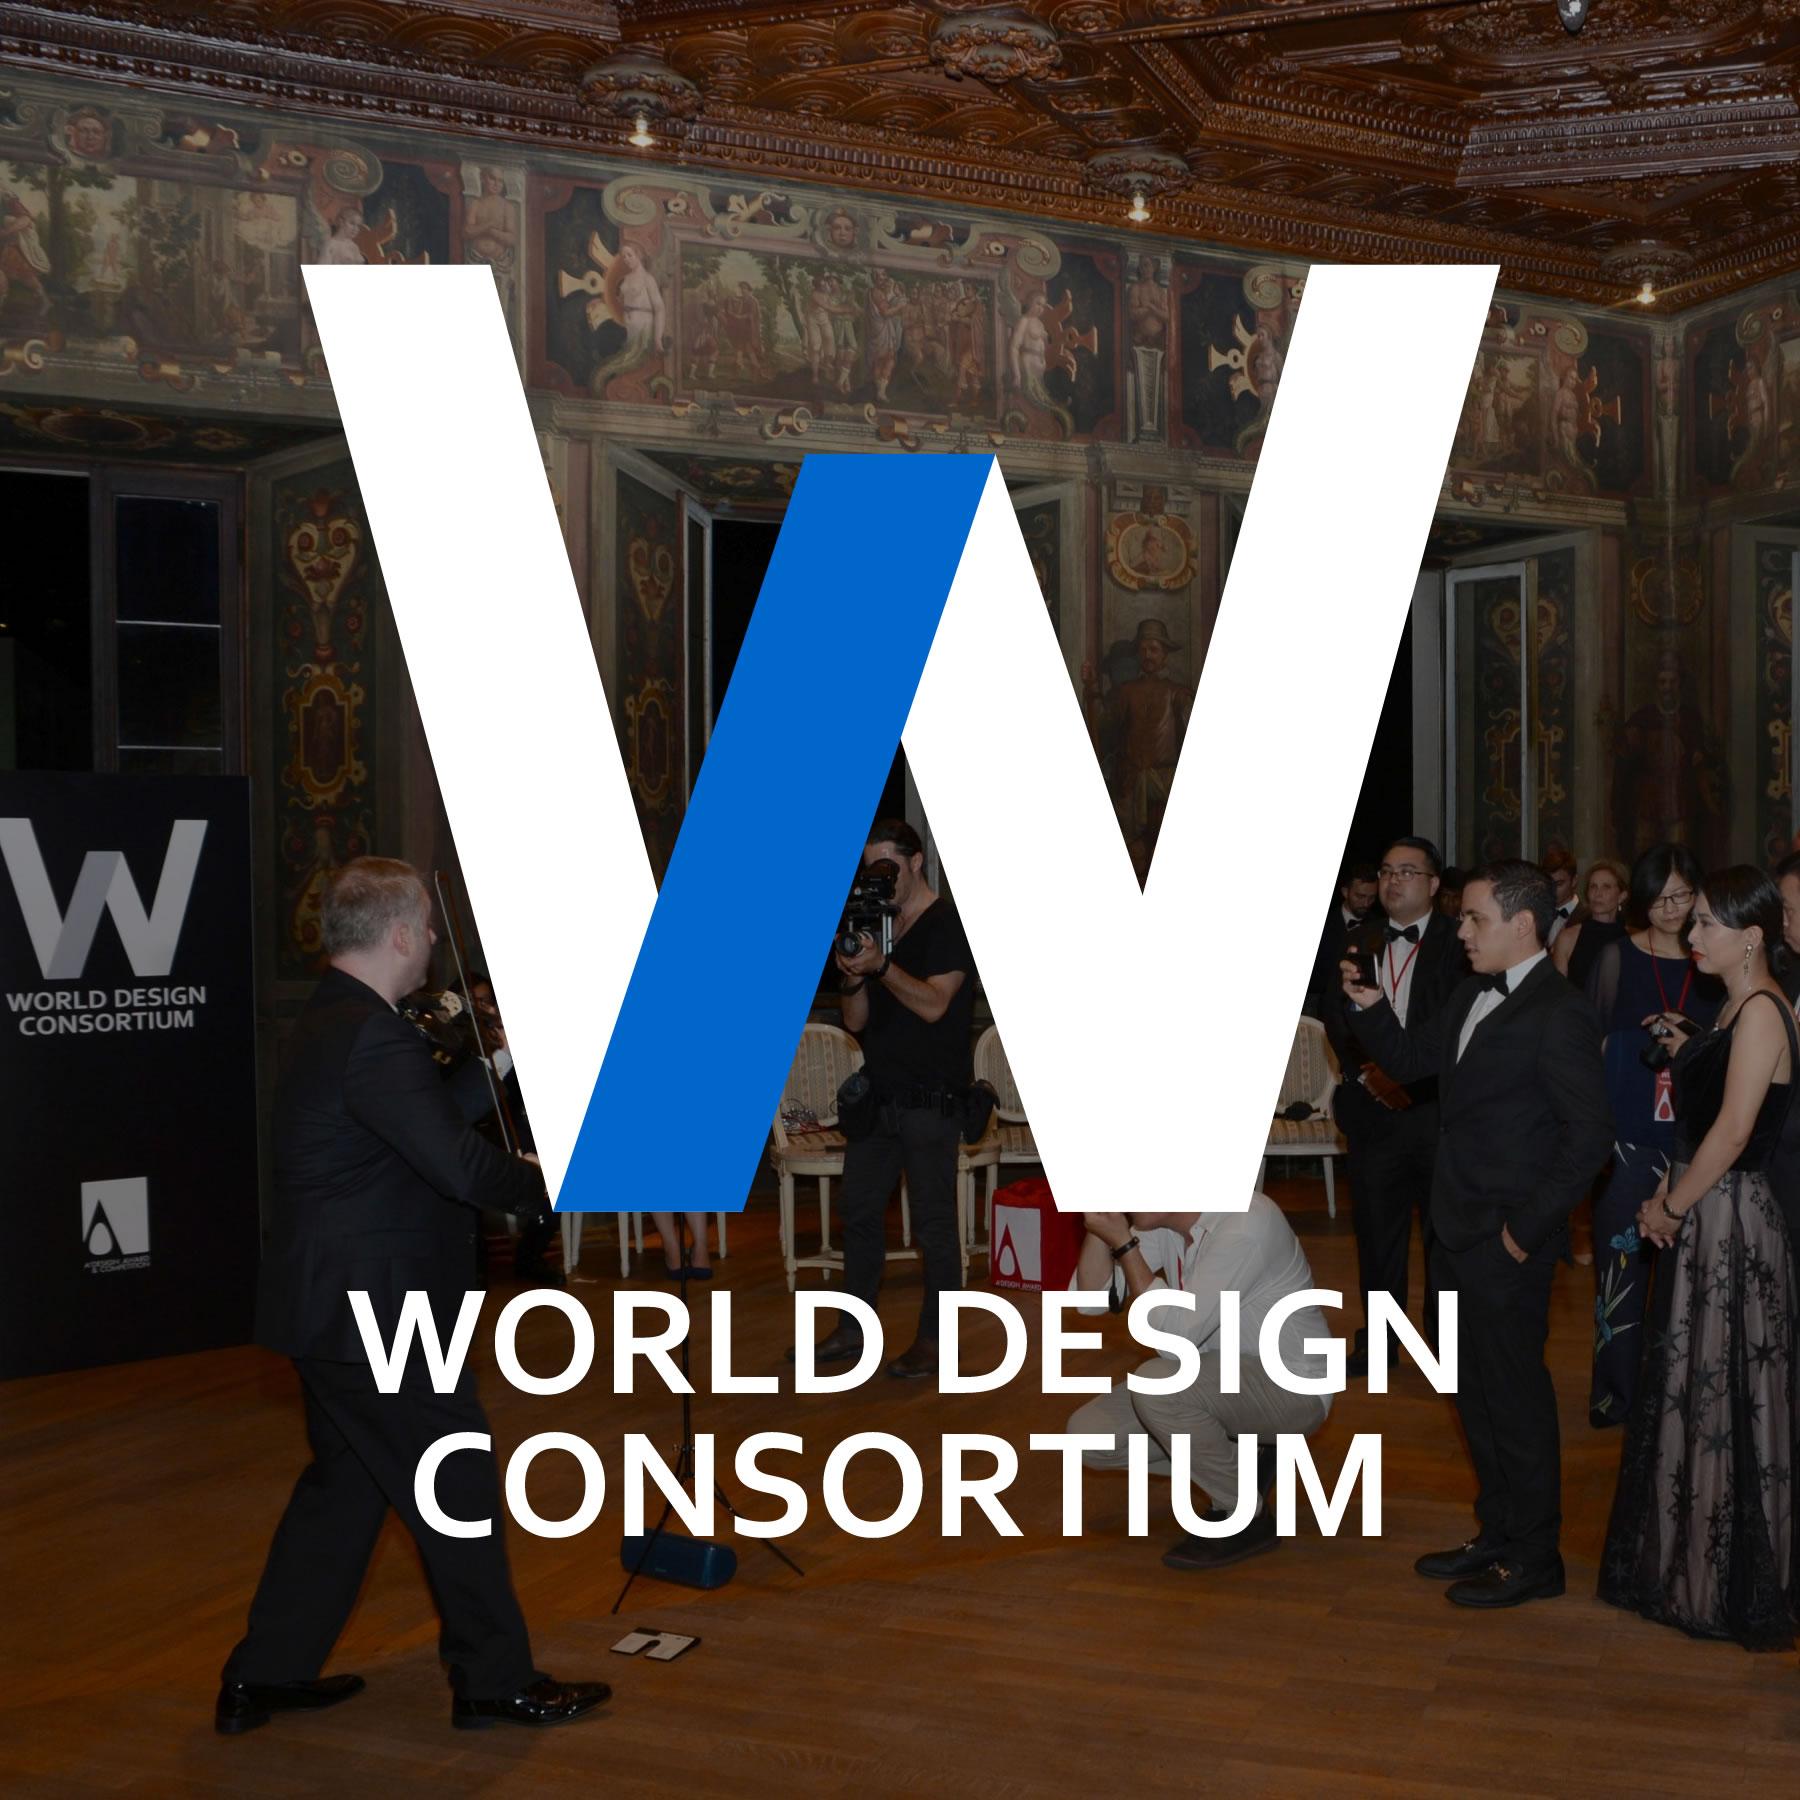 World Design Consortium logo overlay on event photo